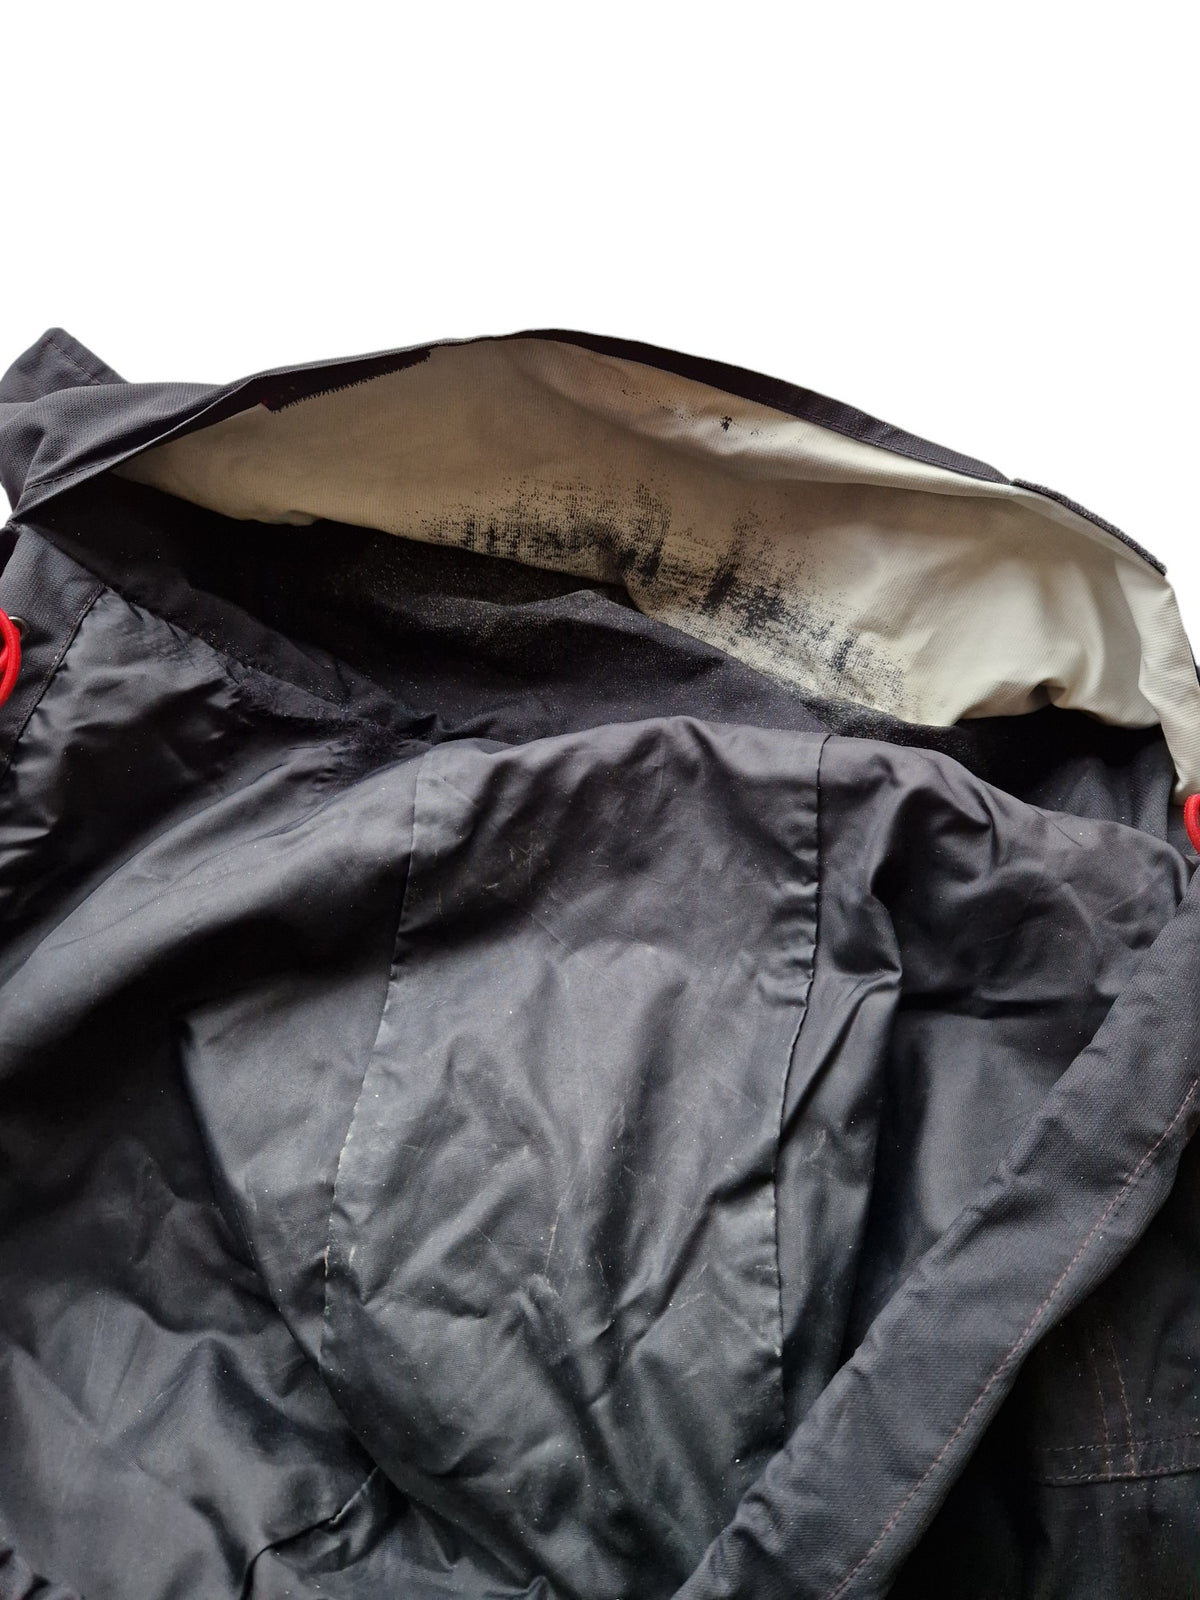 Berghaus AQ2 Rain Jacket - Size Medium